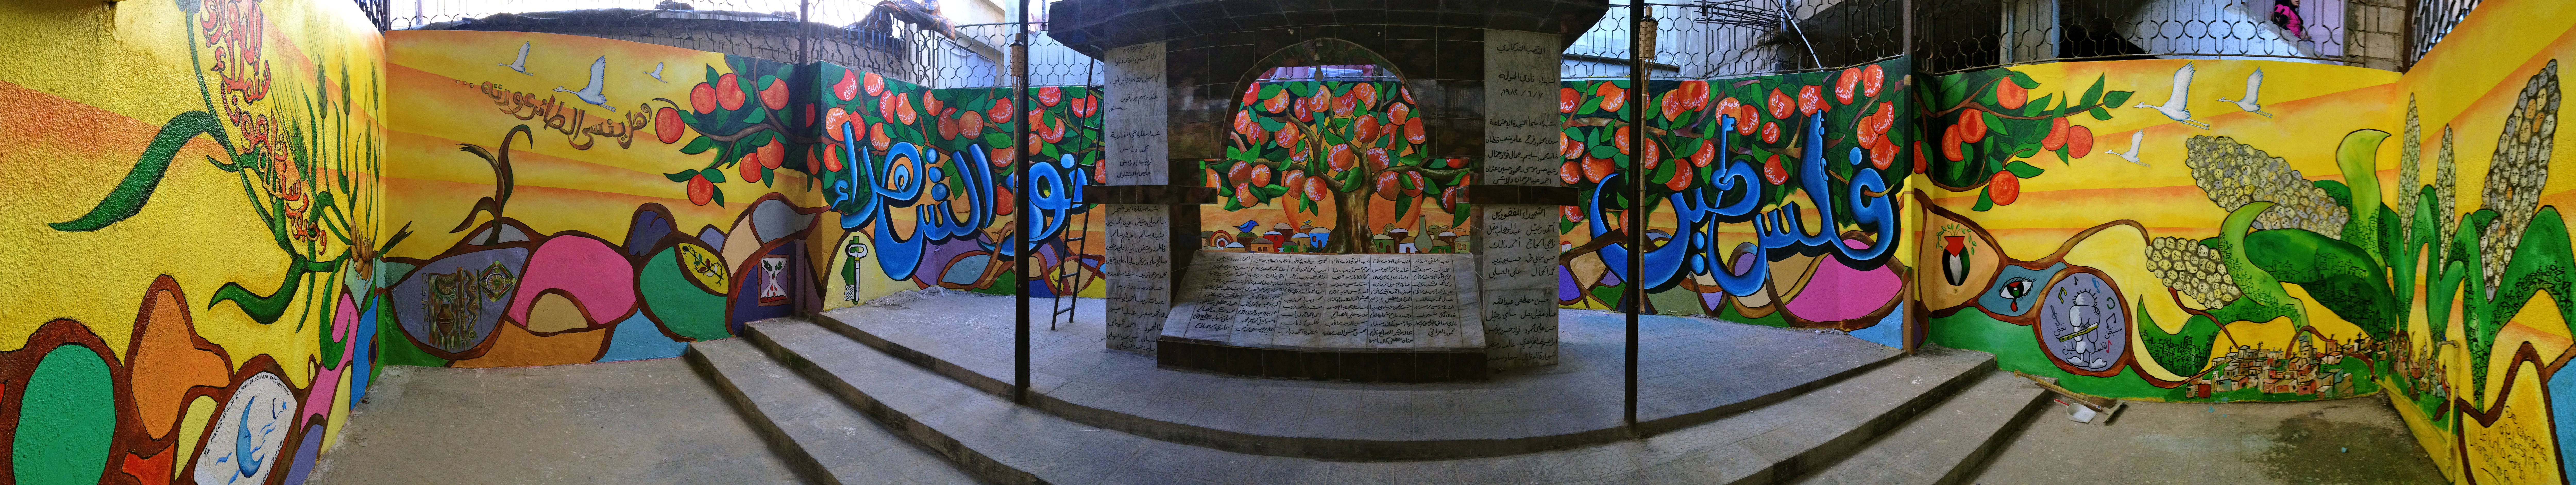 final-borj-el-shamali-mural